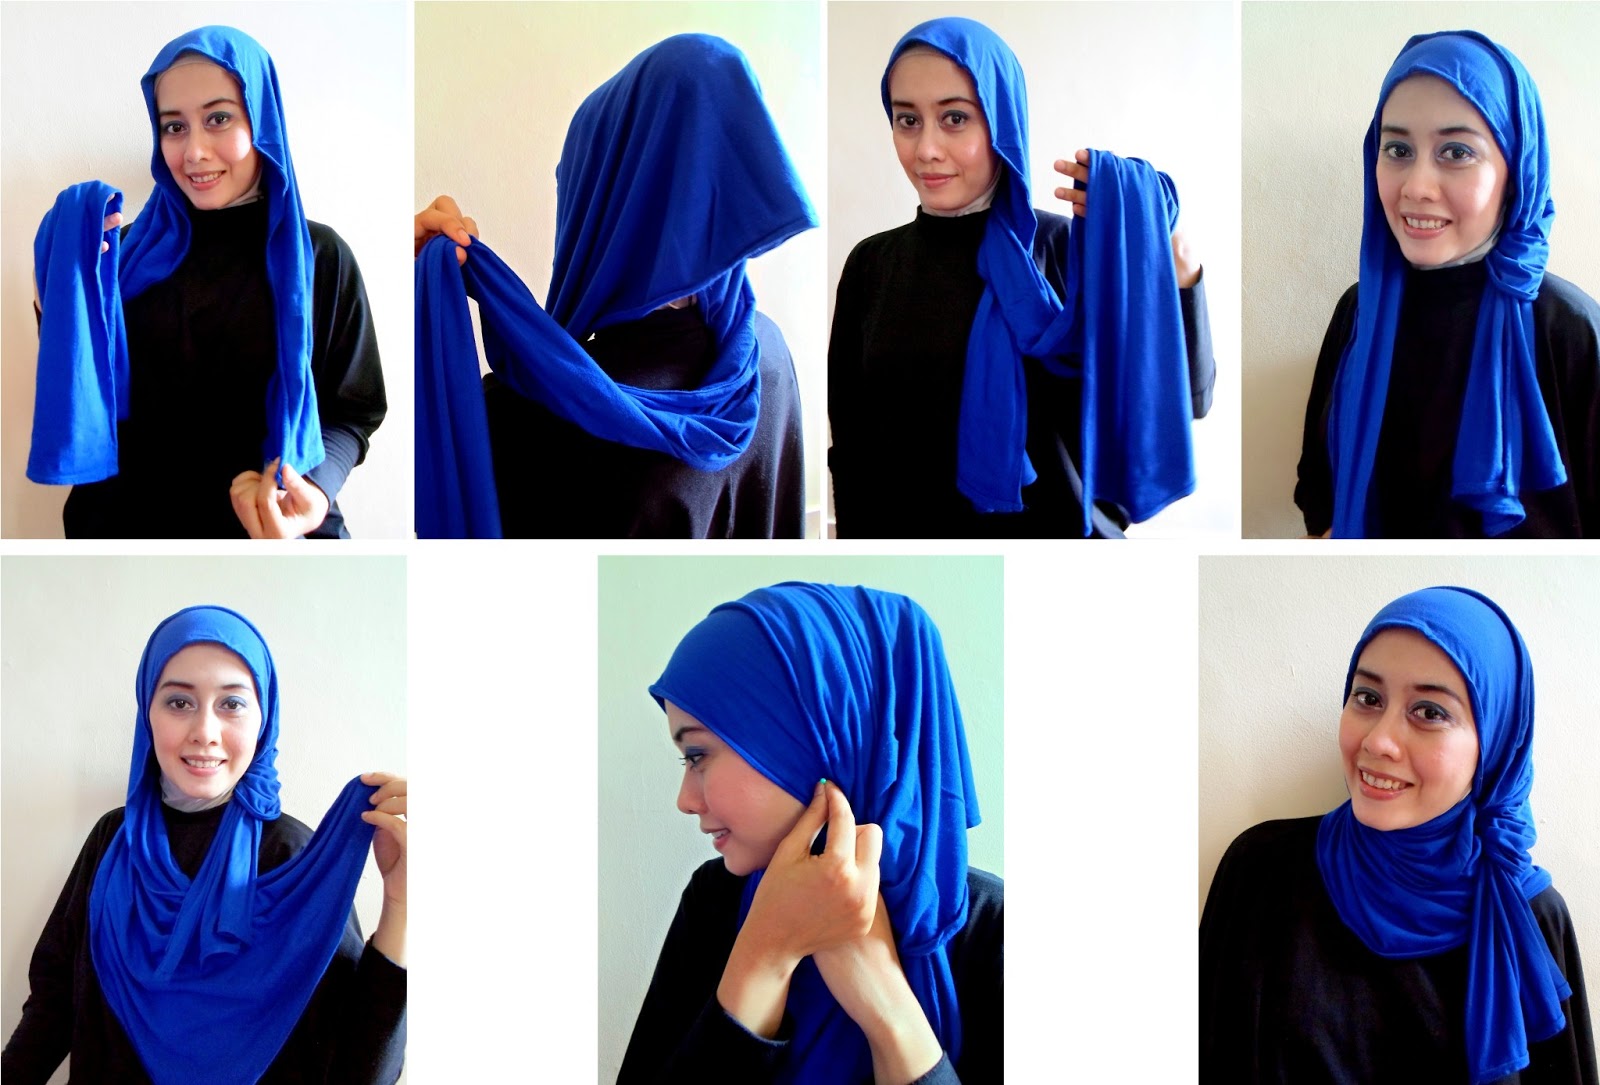 Tutorial Hijab Segi Empat Wajah Bulat Tembem Tutorial Hijab Paling